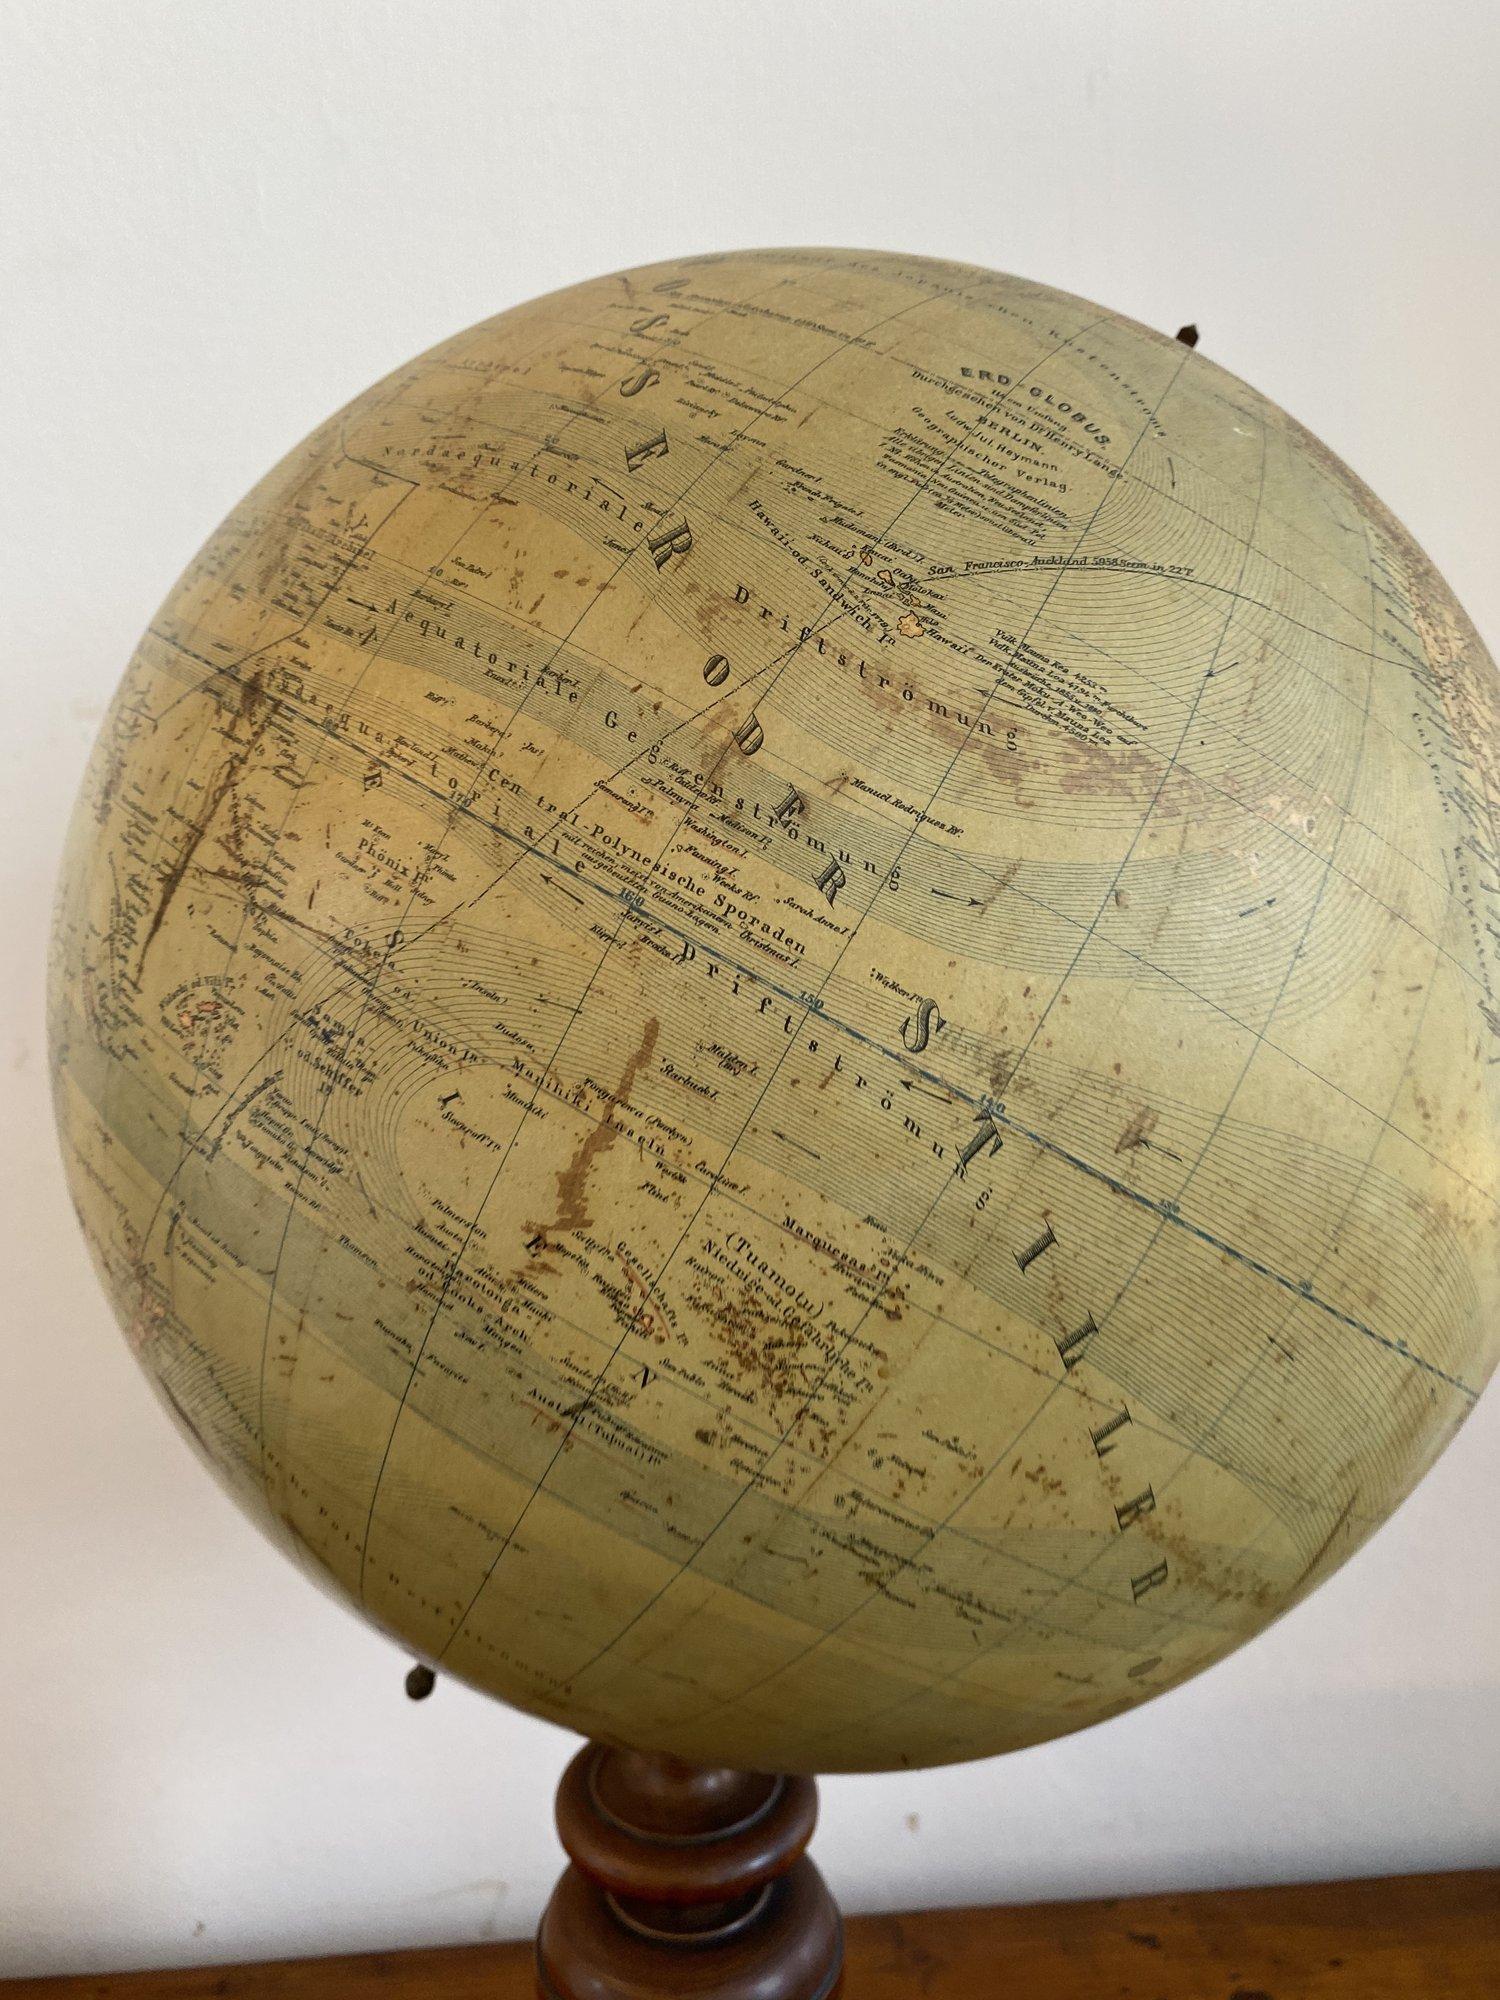 Paper Heymann Terrestrial Globe with Compass, Berlin, circa 1885